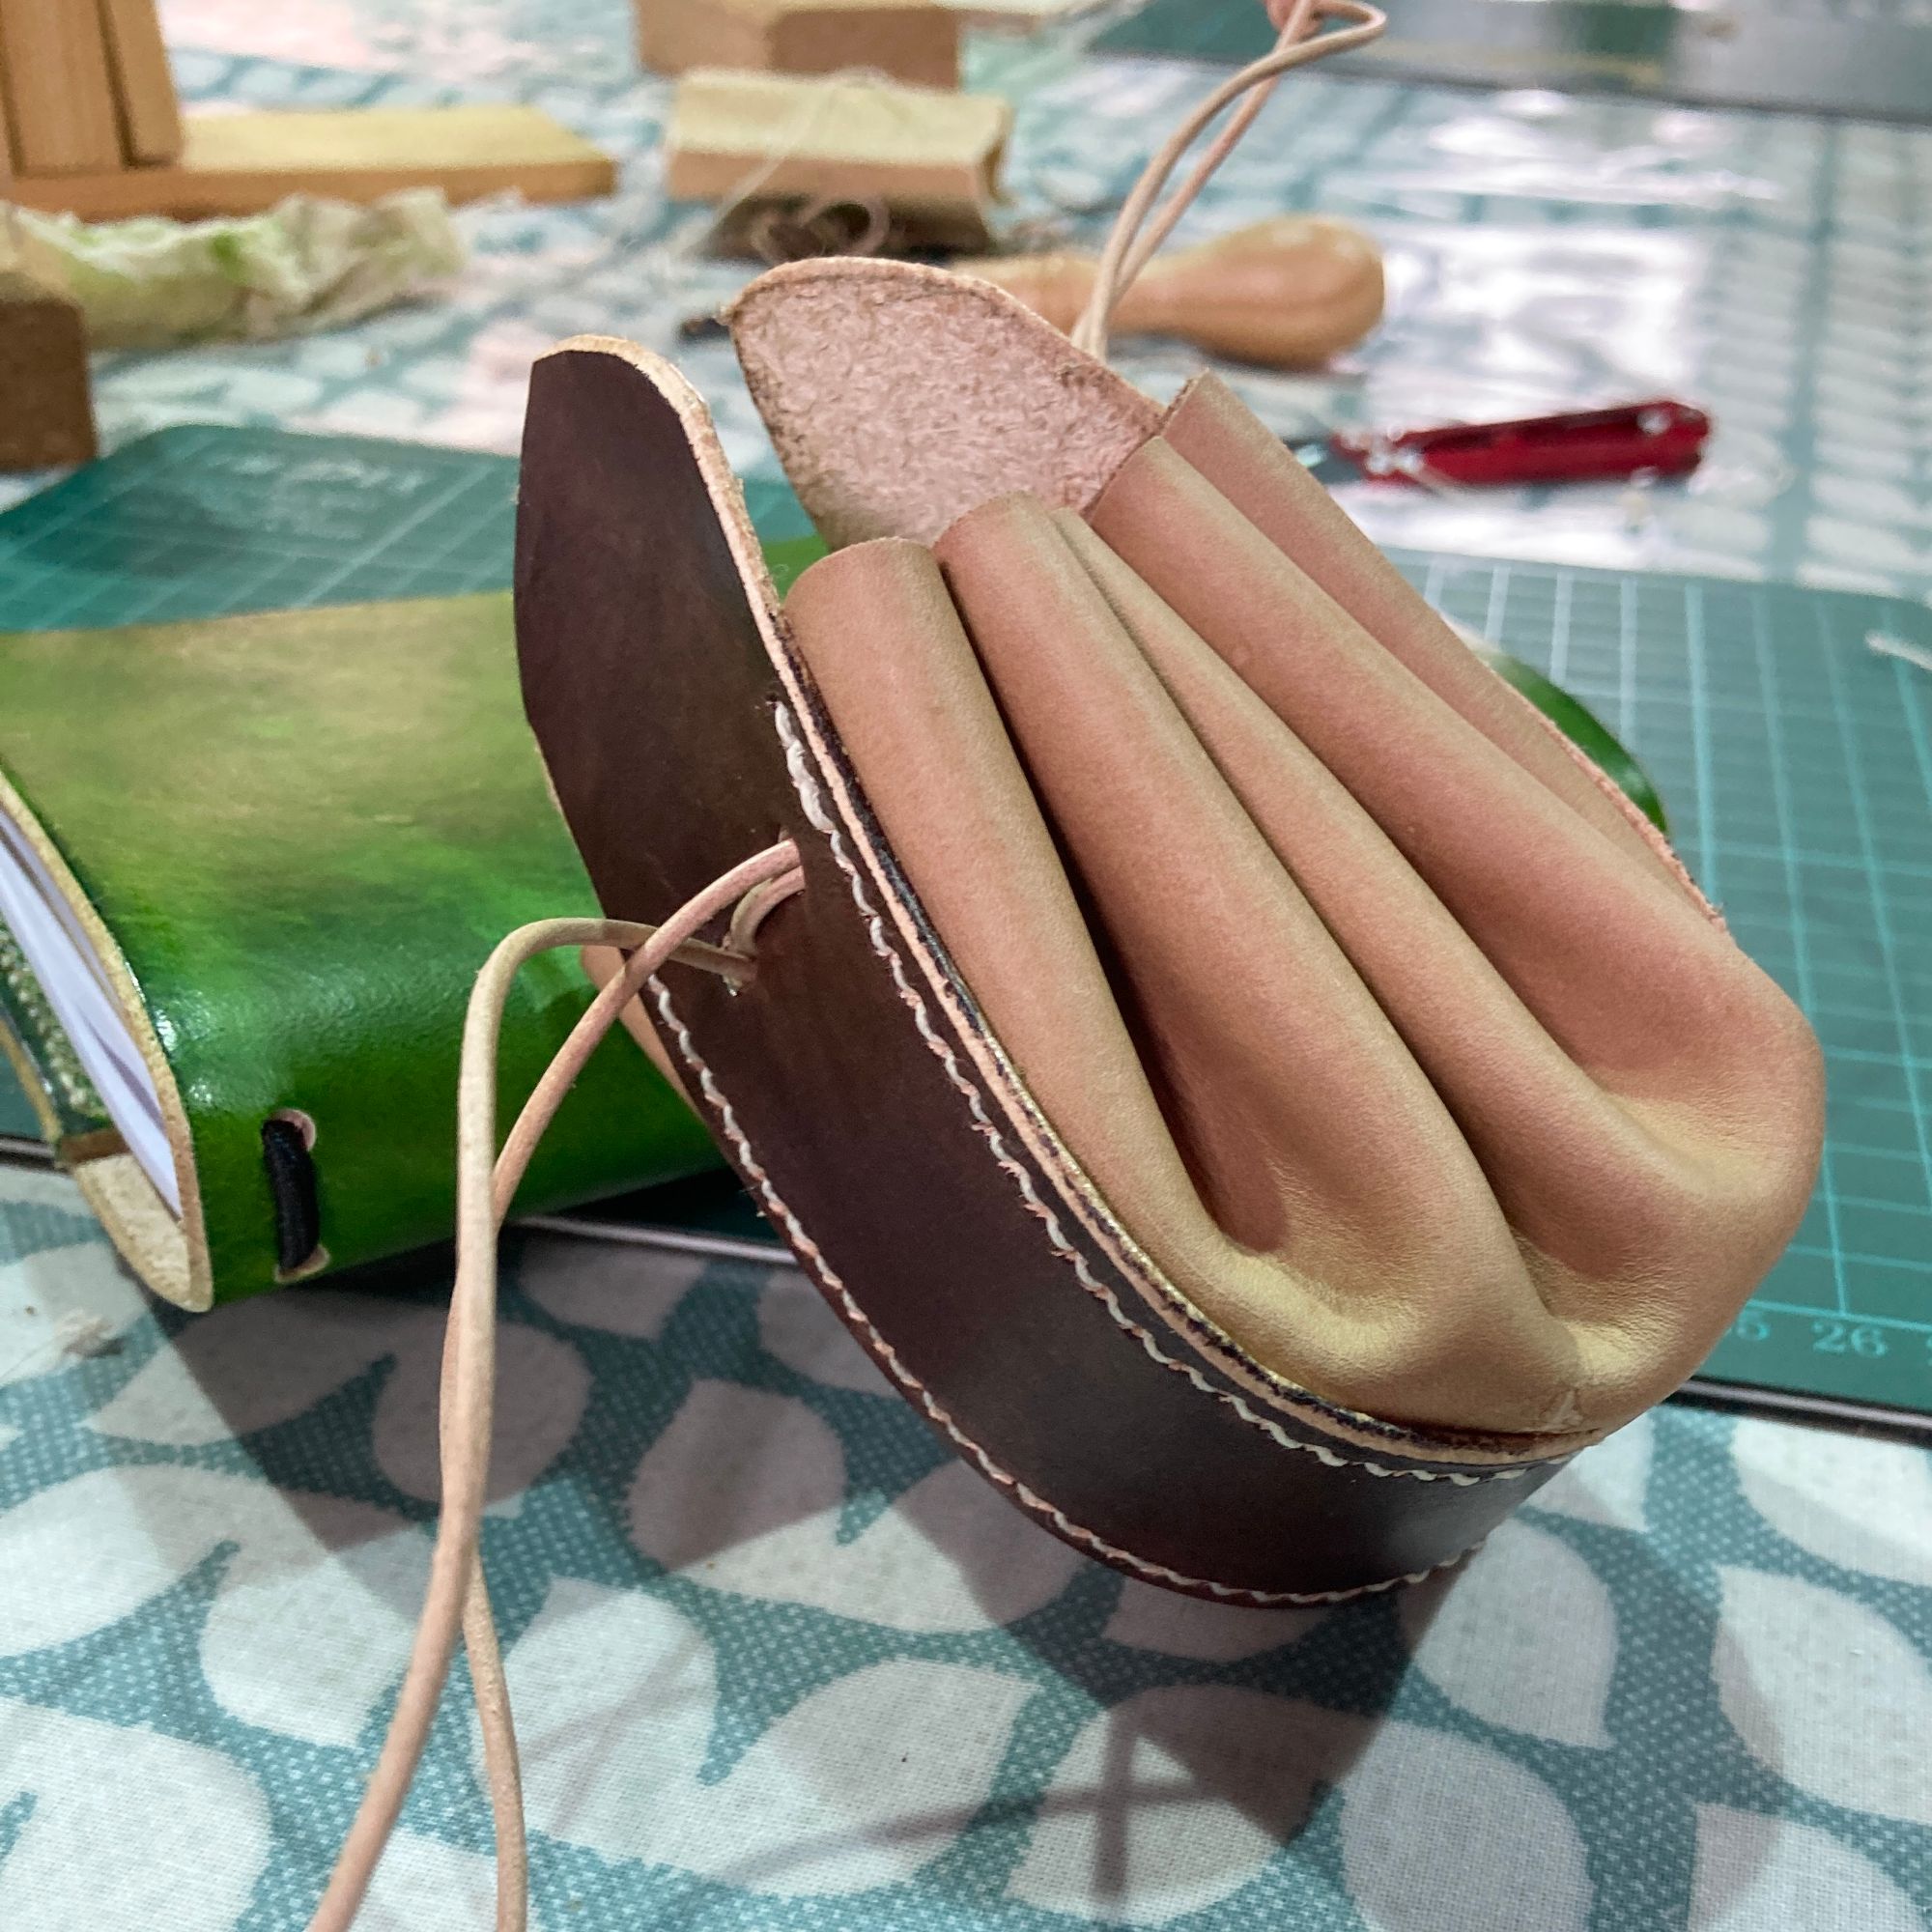 Leather Workshop - New Skills